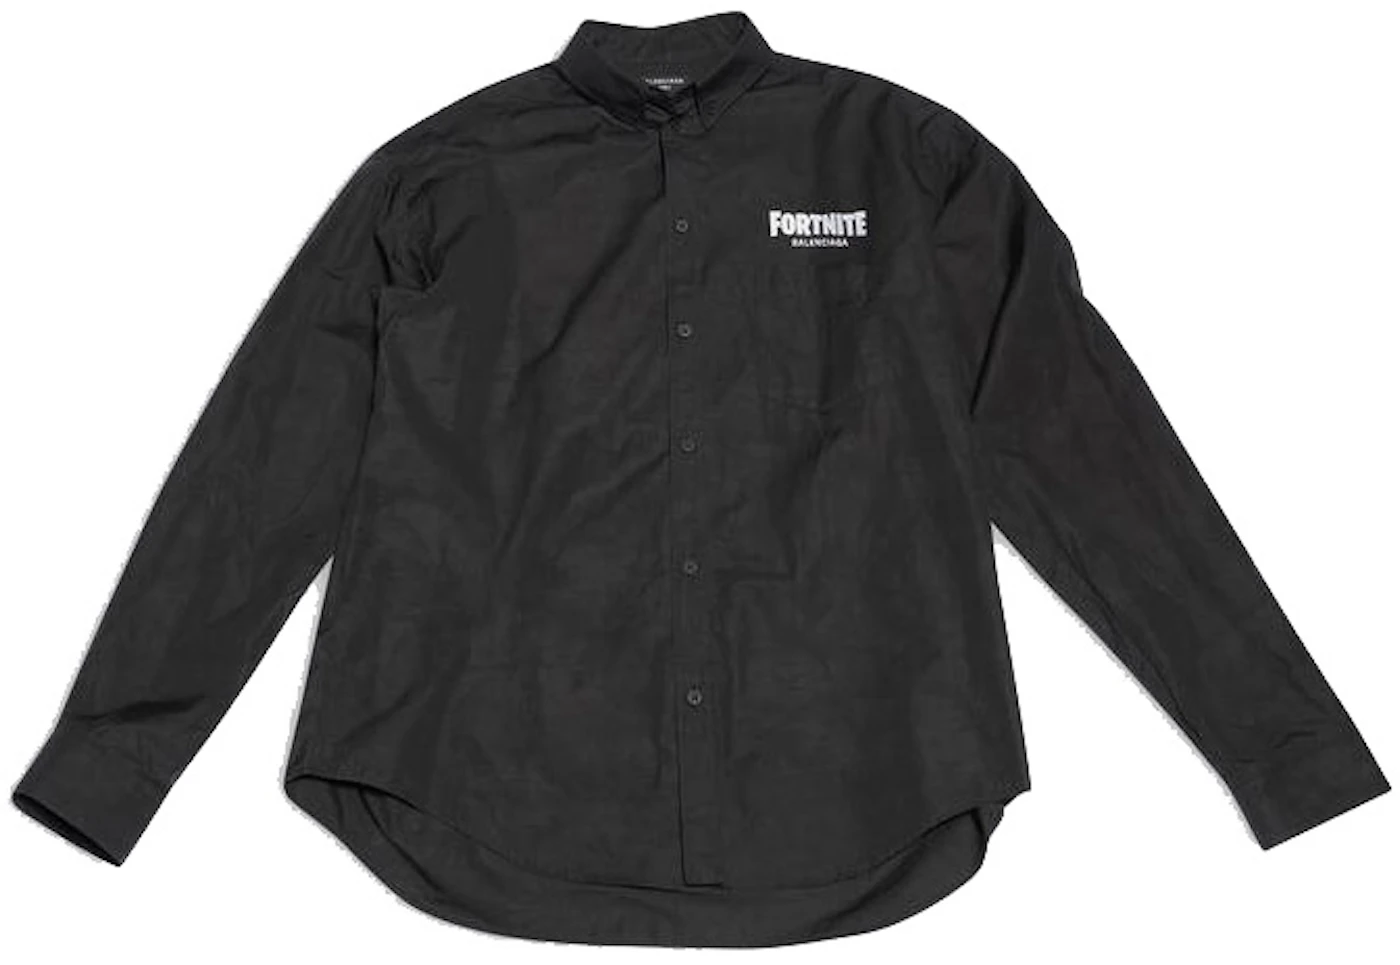 Balenciaga x Fortnite 2021 Large Fit Jacket Black